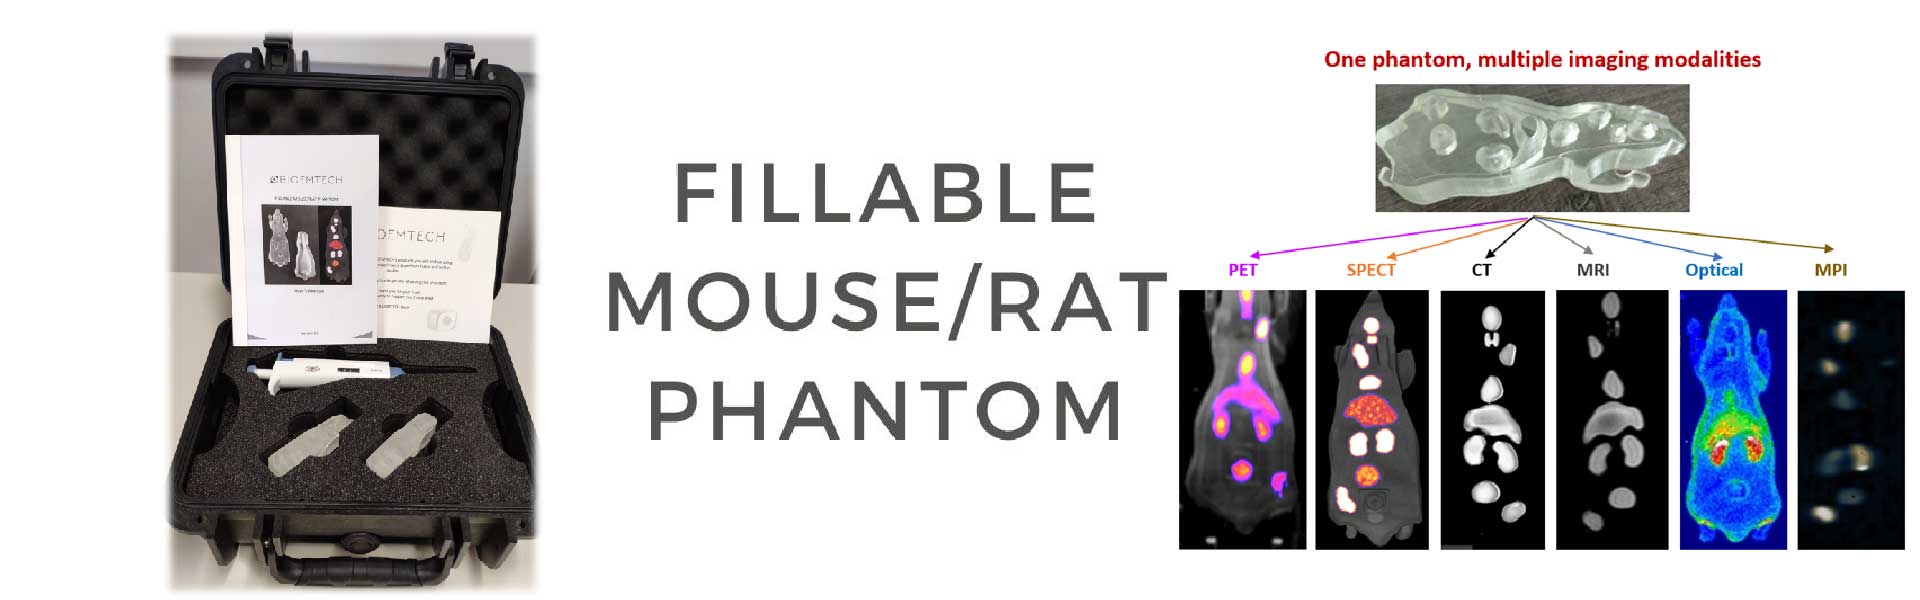 Fillable mouse/rat phantom